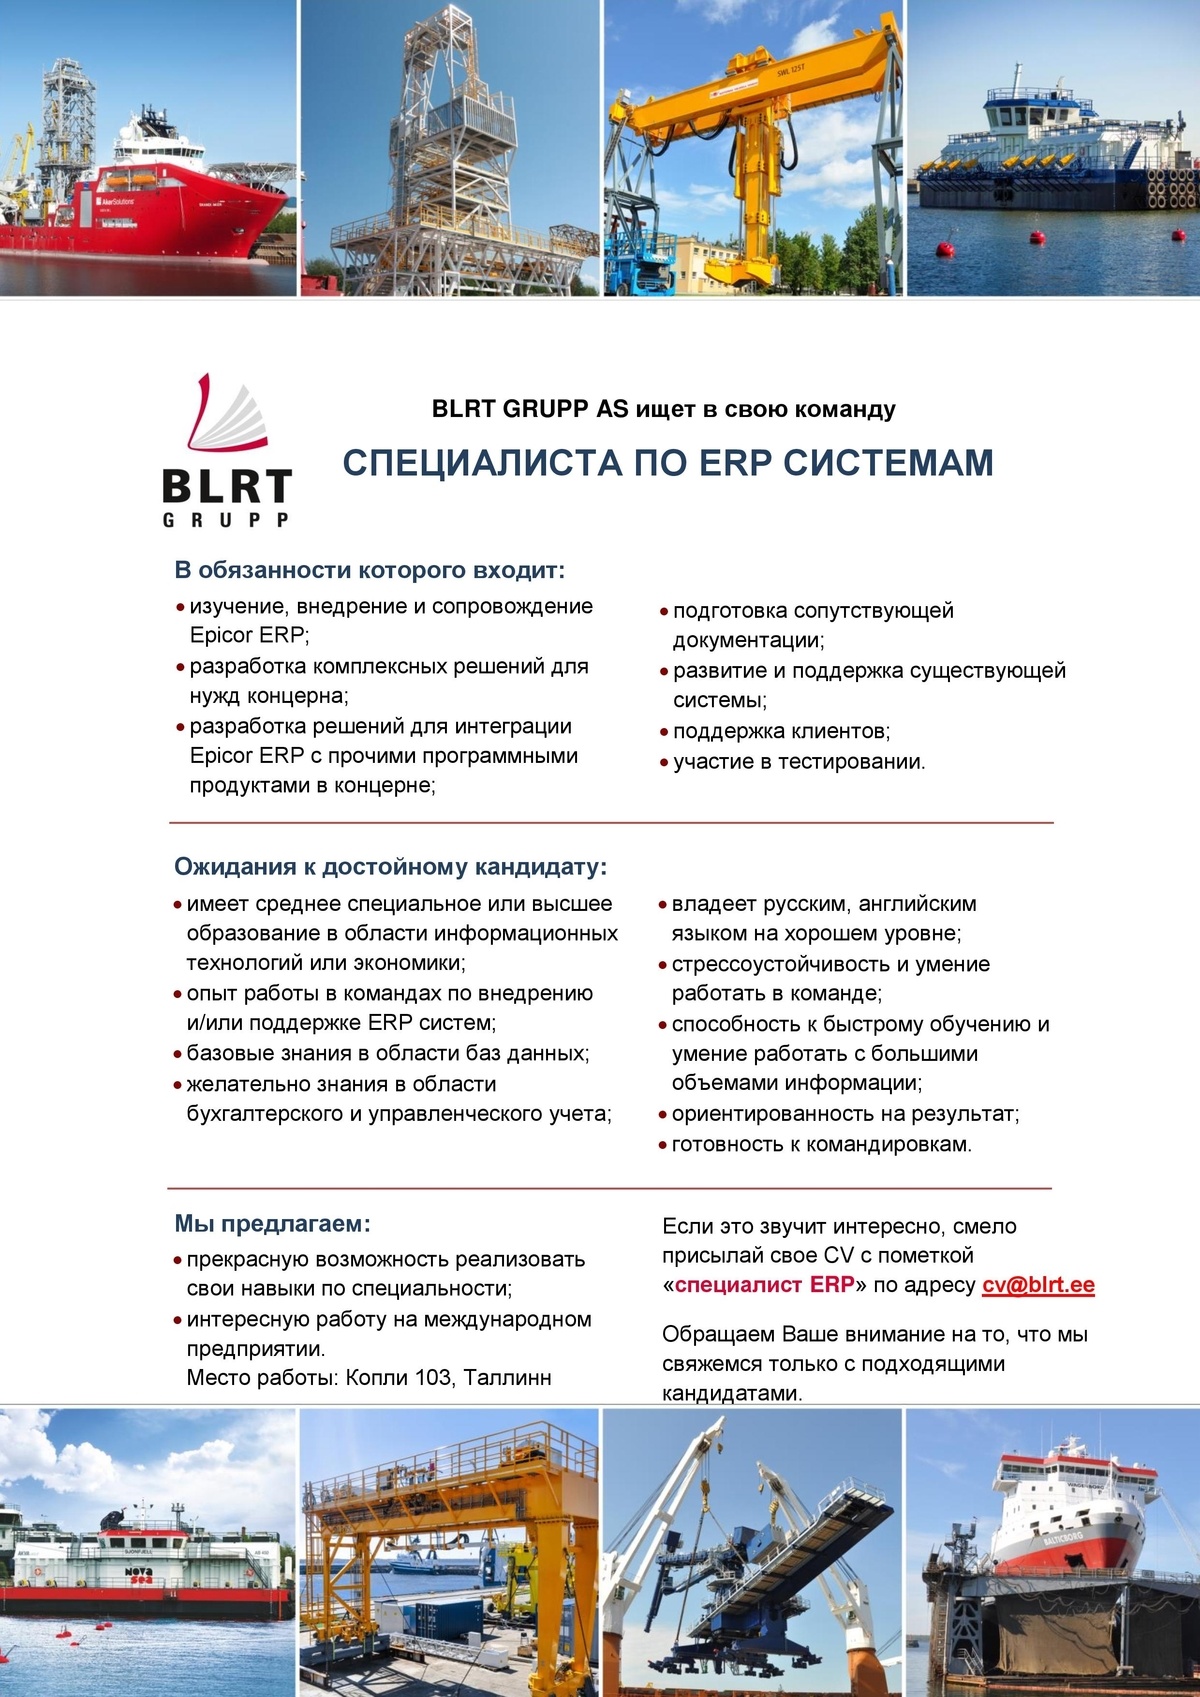 BLRT GRUPP AS Специалист по ERP системам